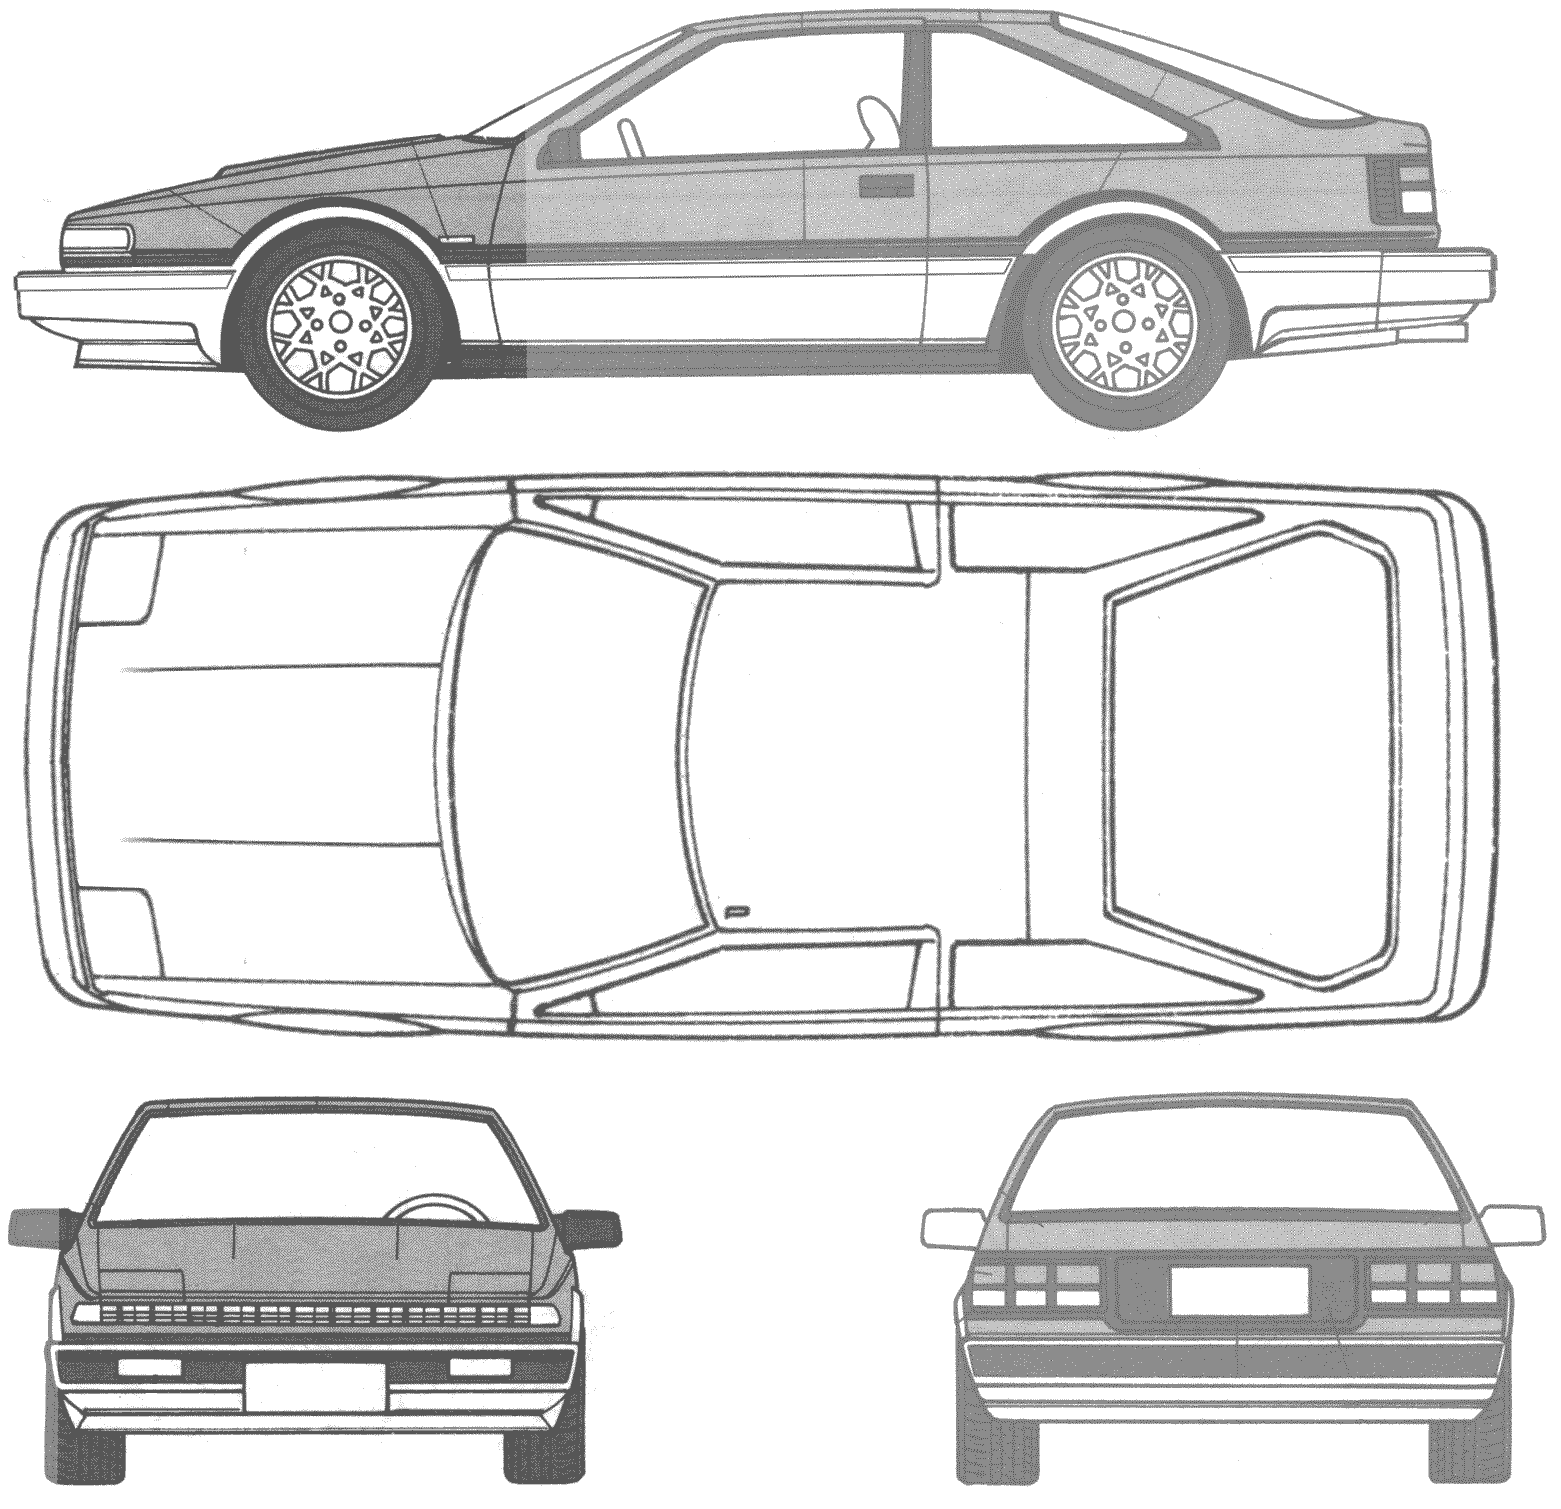 Nissan Silvia S12 blueprint